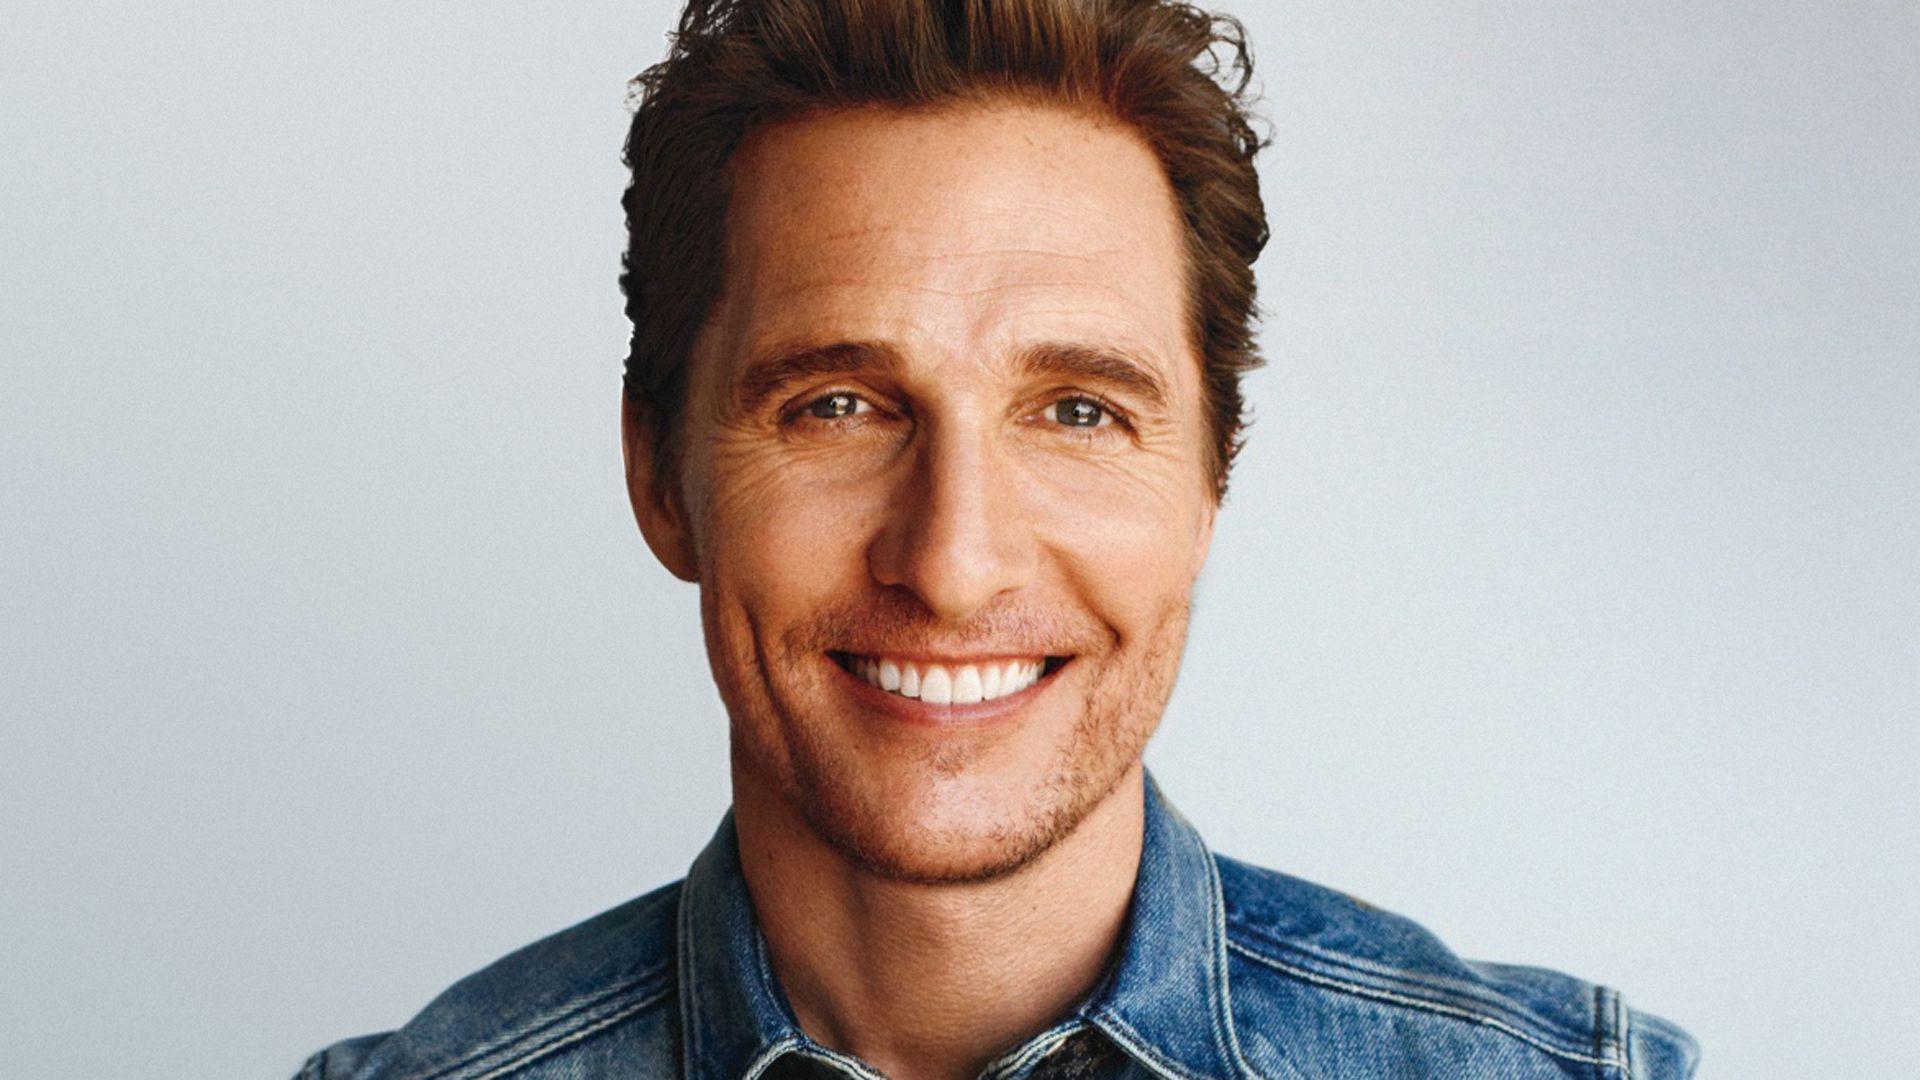 Matthew McConaughey Smile Wallpaper 56132 1920x1080 px